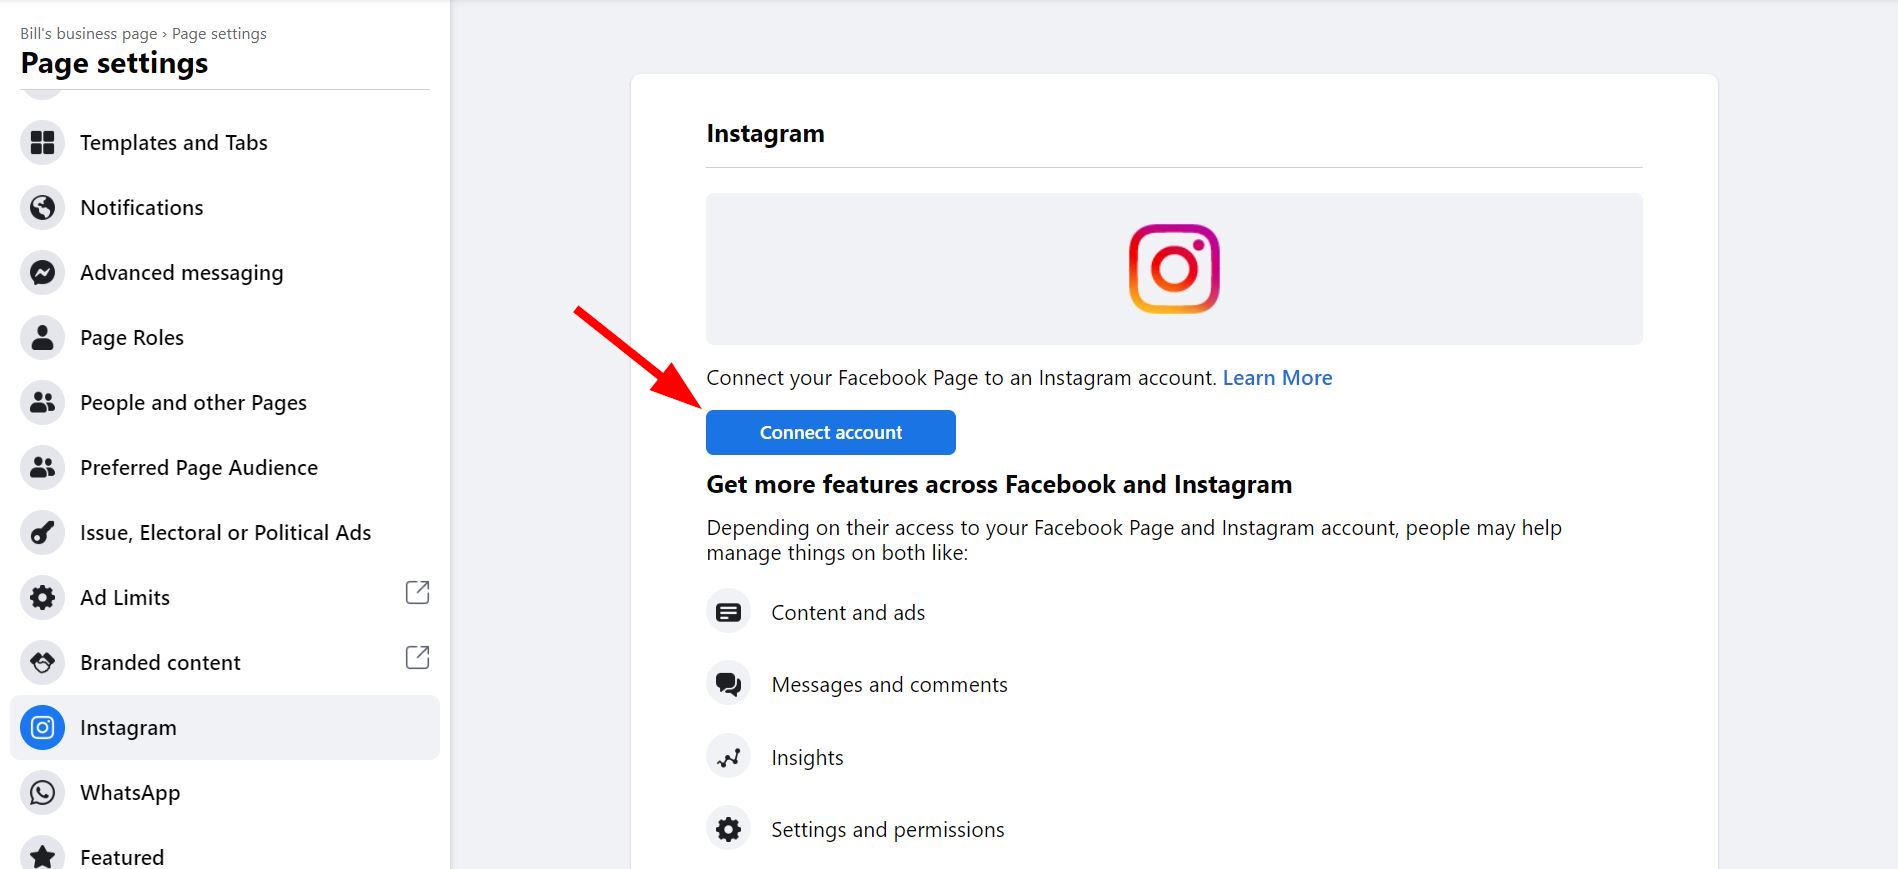 Link your Instagram & Facebook Page in 2 mins - 2023 update